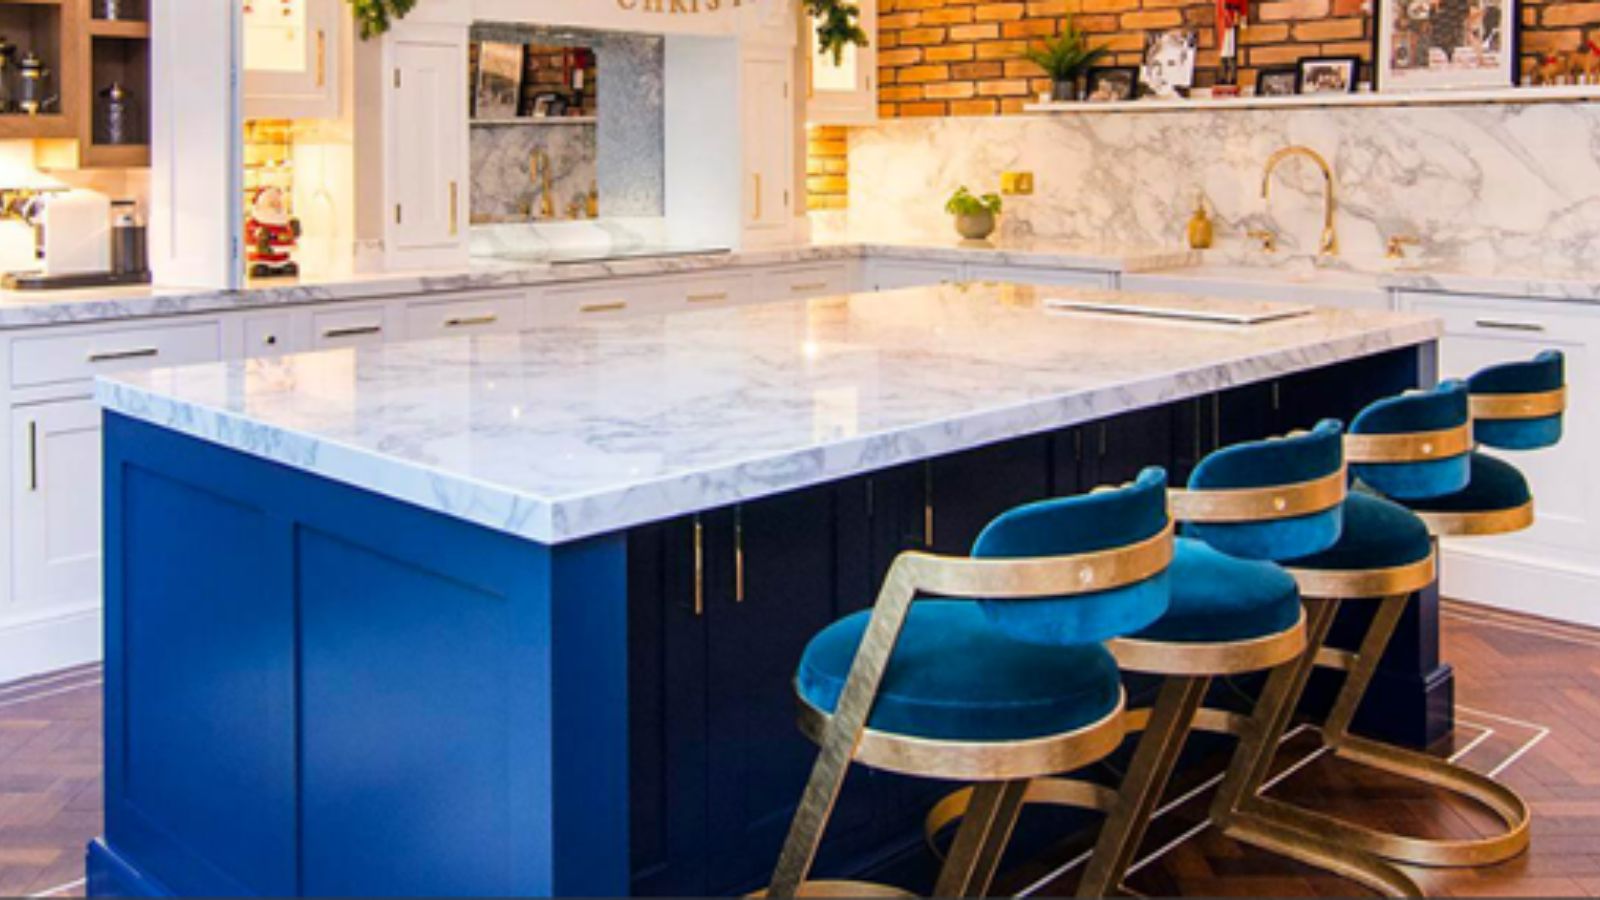 What colour decor for blue kitchen cabinets?